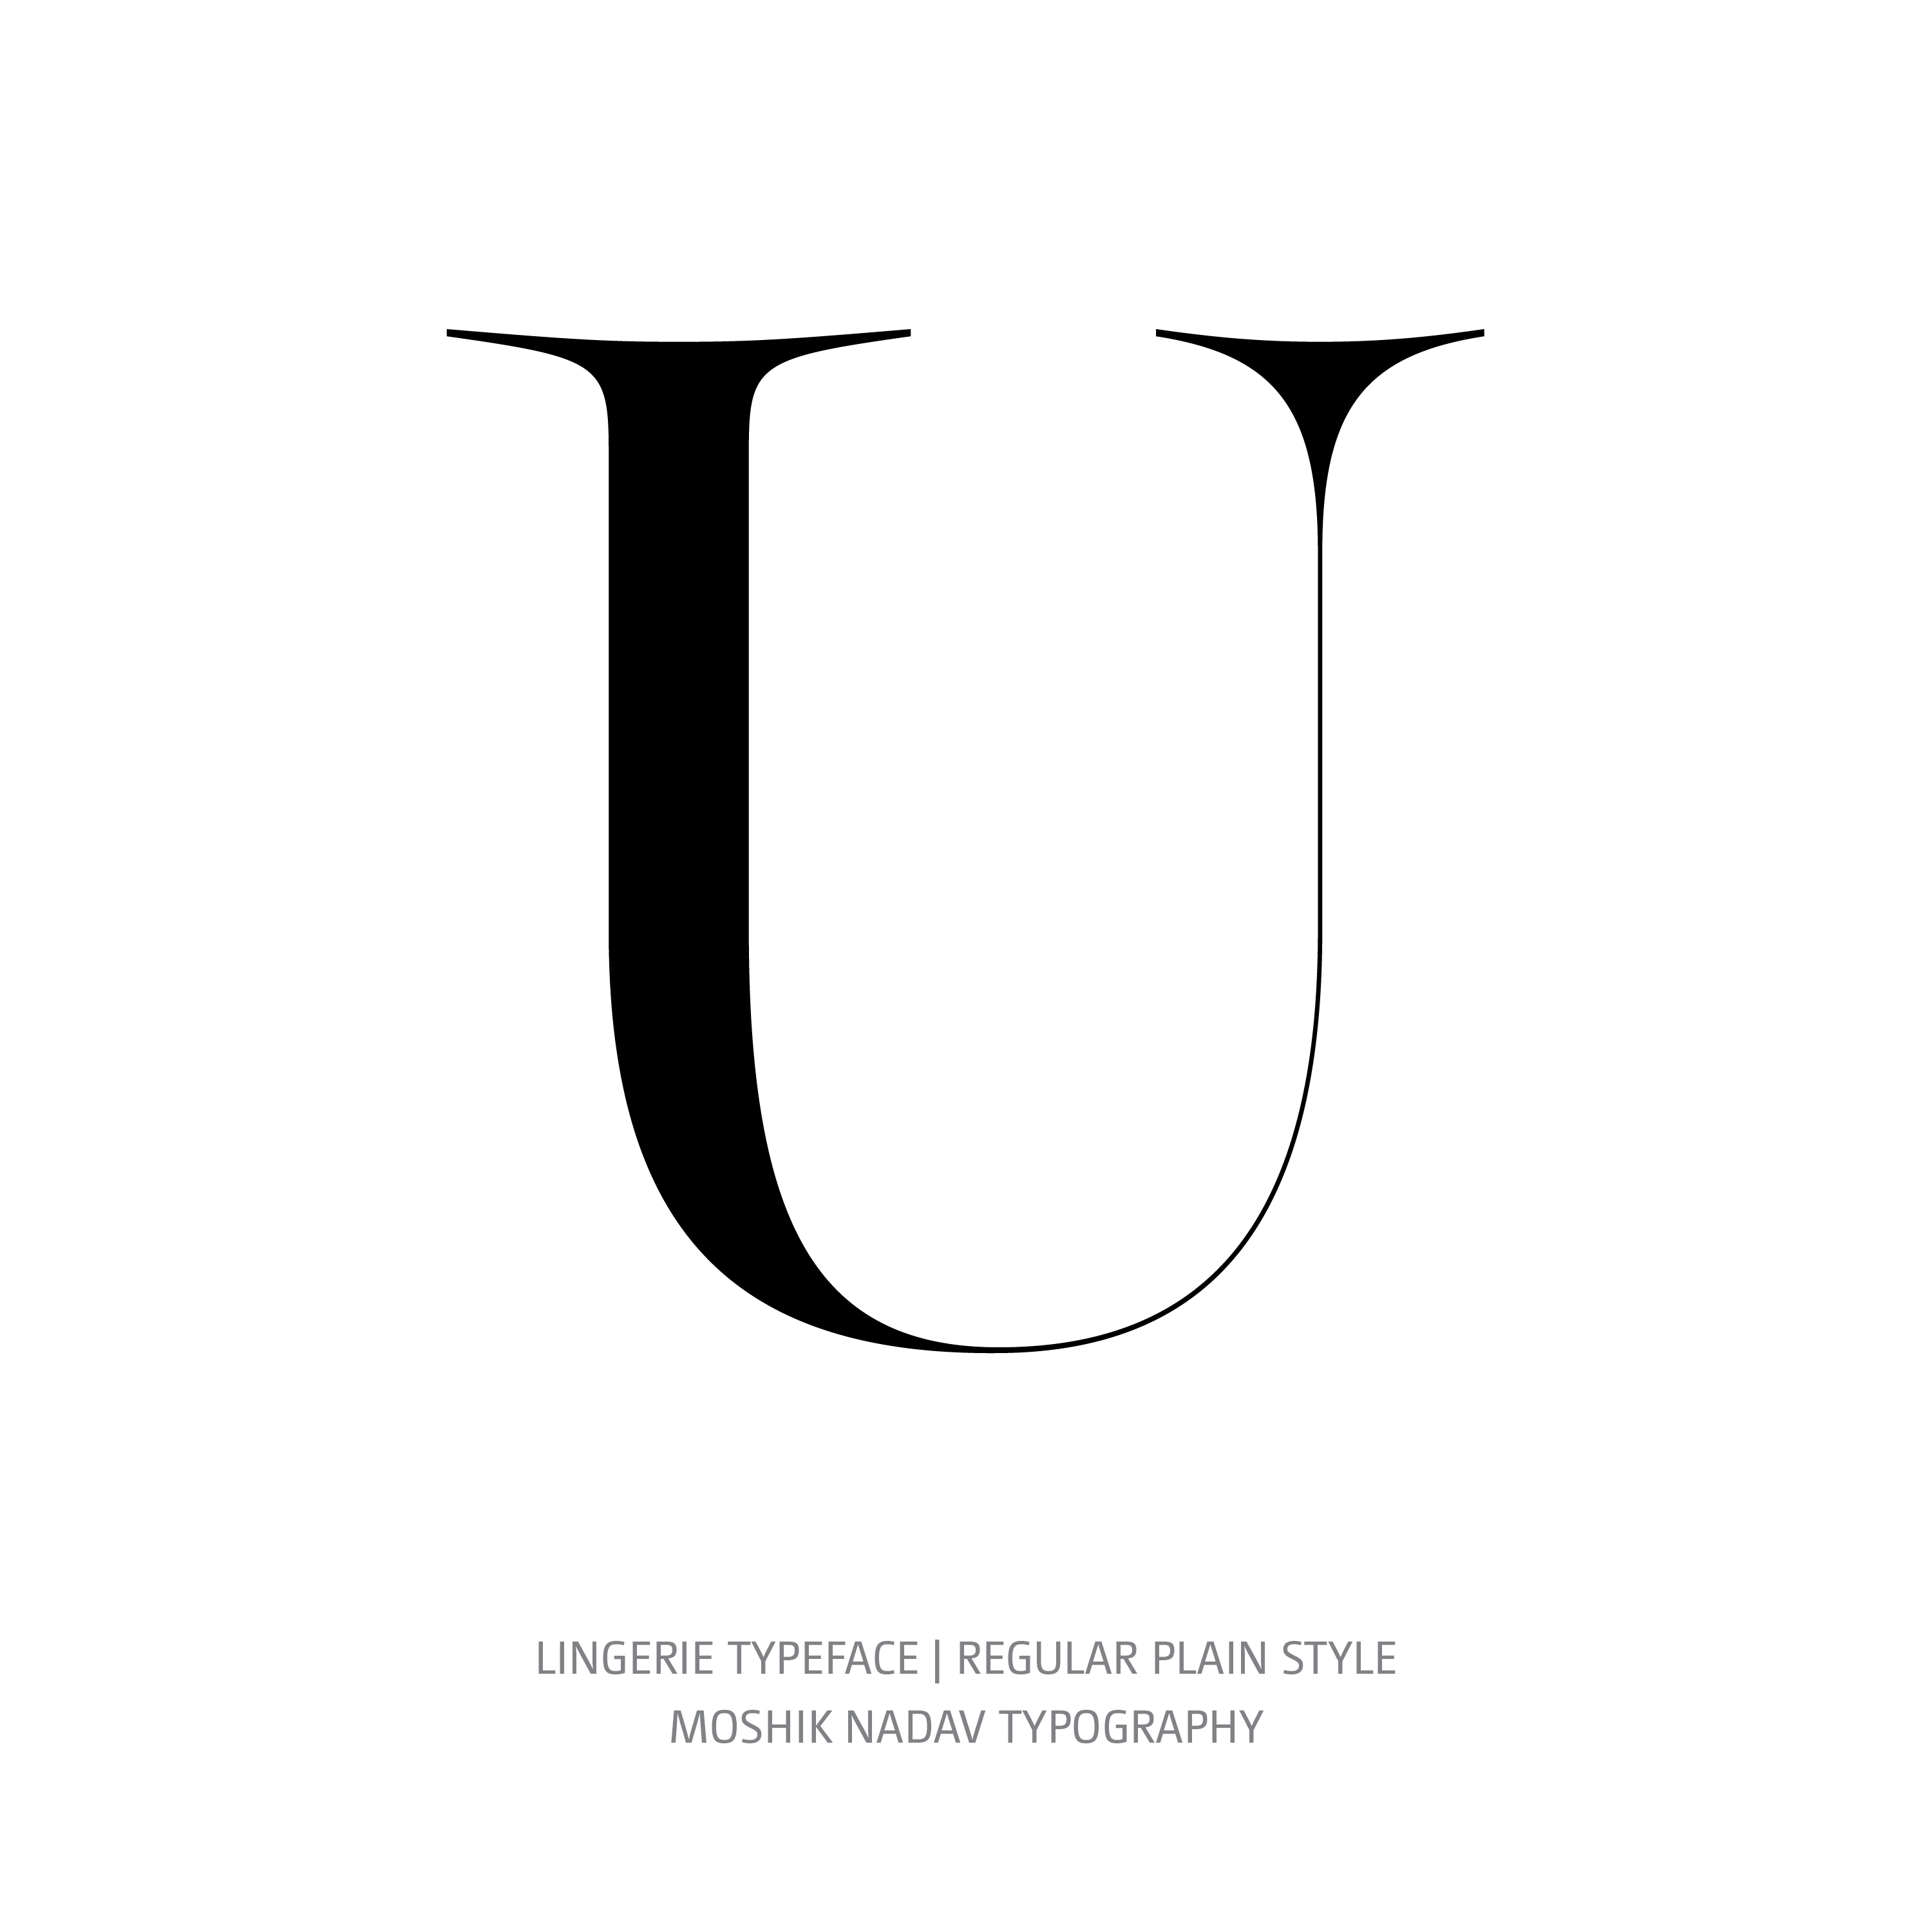 Lingerie Typeface Regular Plain U